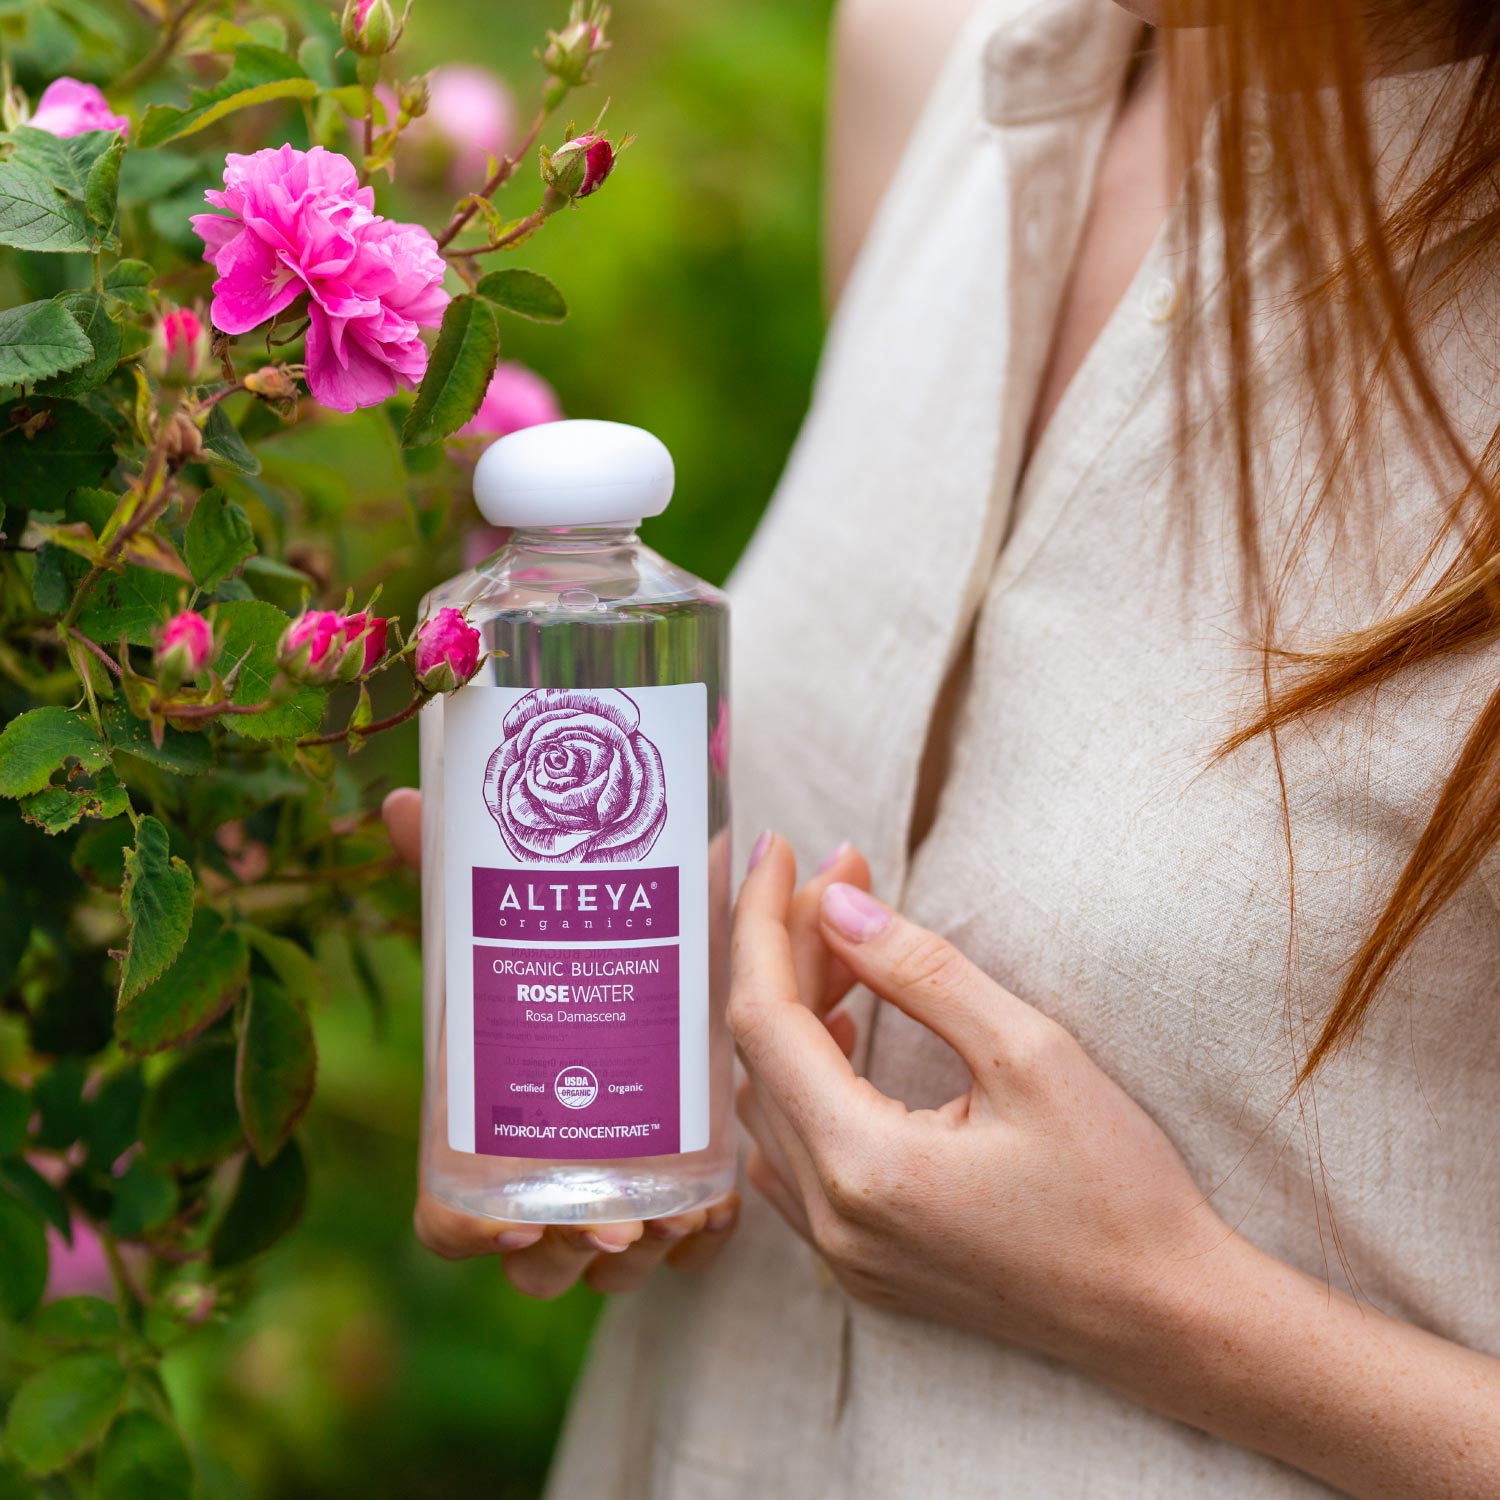 An Organic Bulgarian Rose Water - 8.5 Fl Oz bottle from Alteya Organics providing skincare hydration.